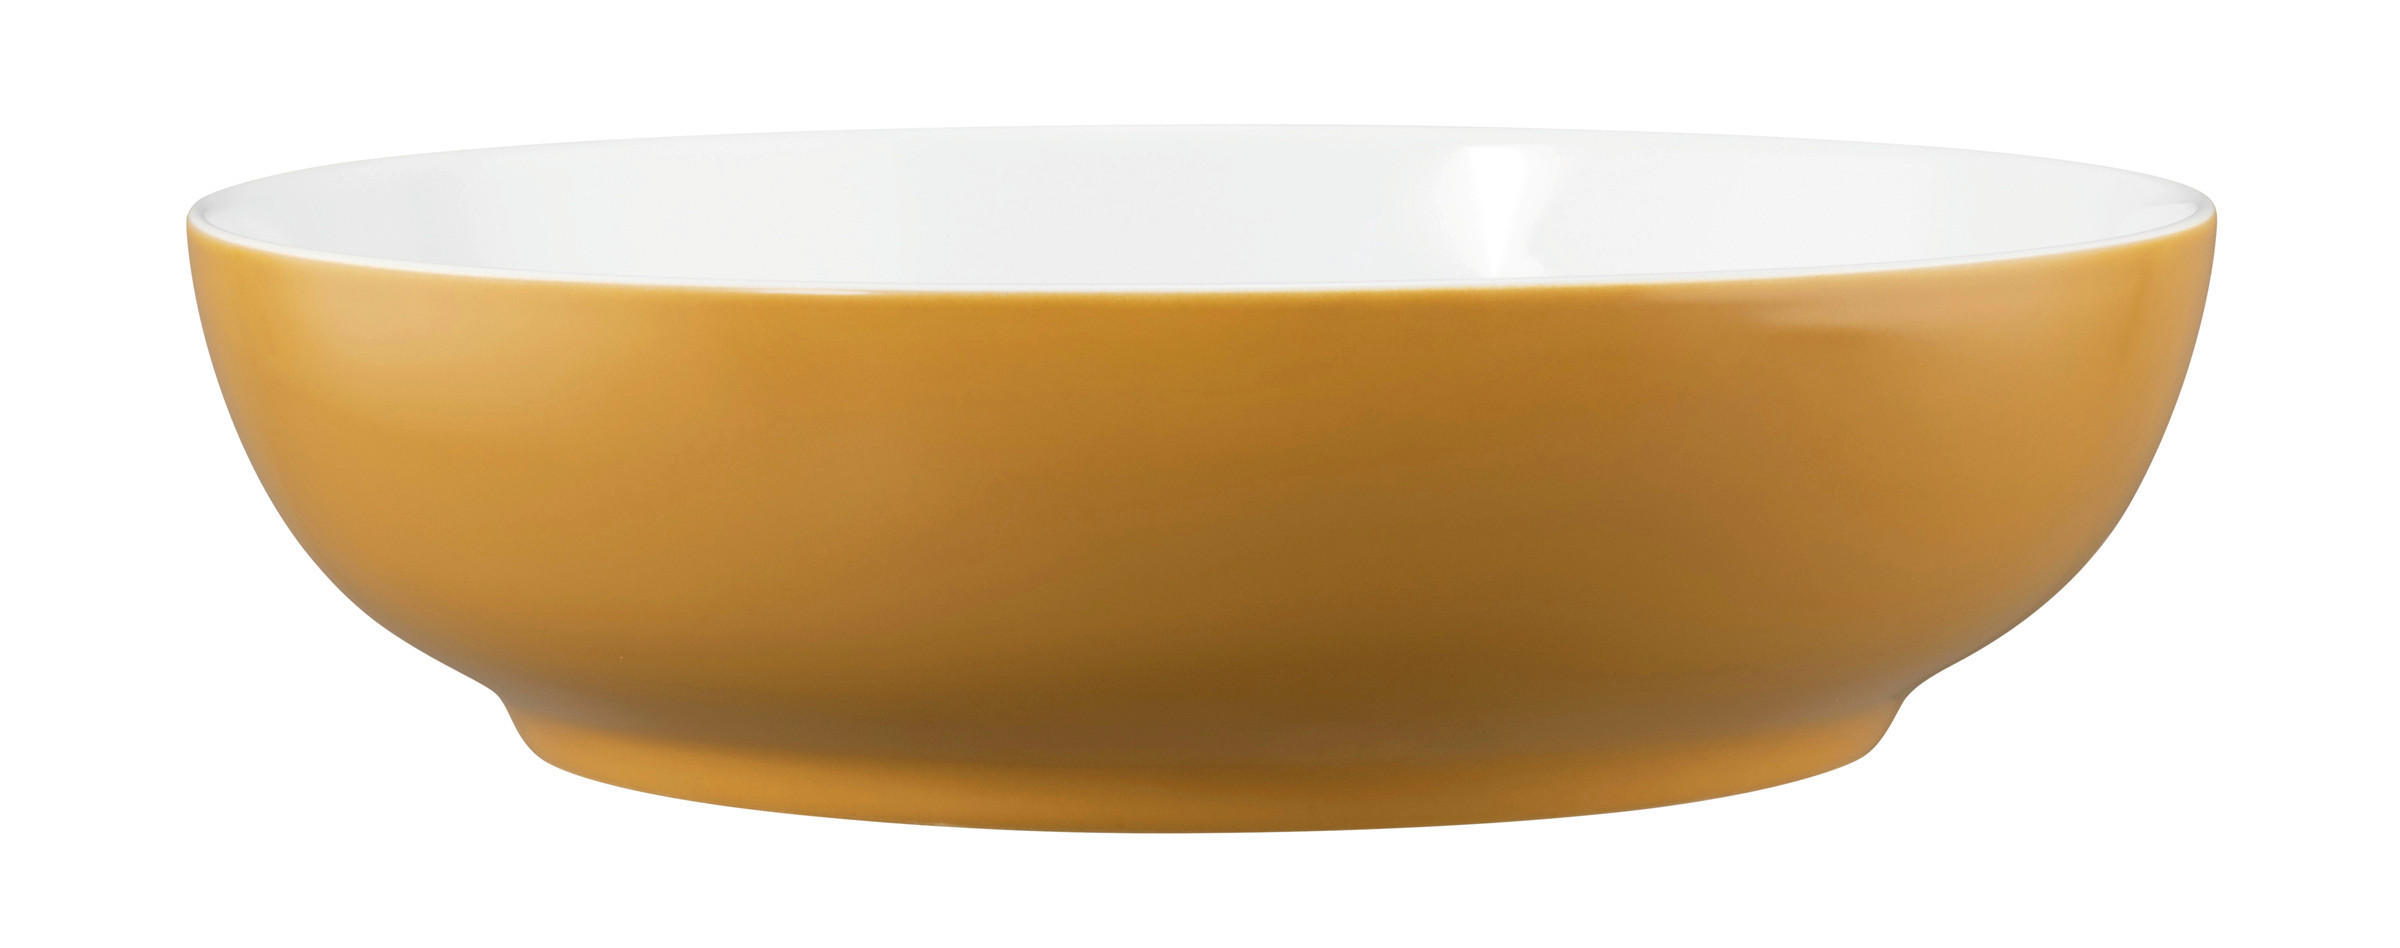 SCHÜSSEL Keramik Porzellan  - Goldfarben, Basics, Keramik (25/25/10cm) - Seltmann Weiden